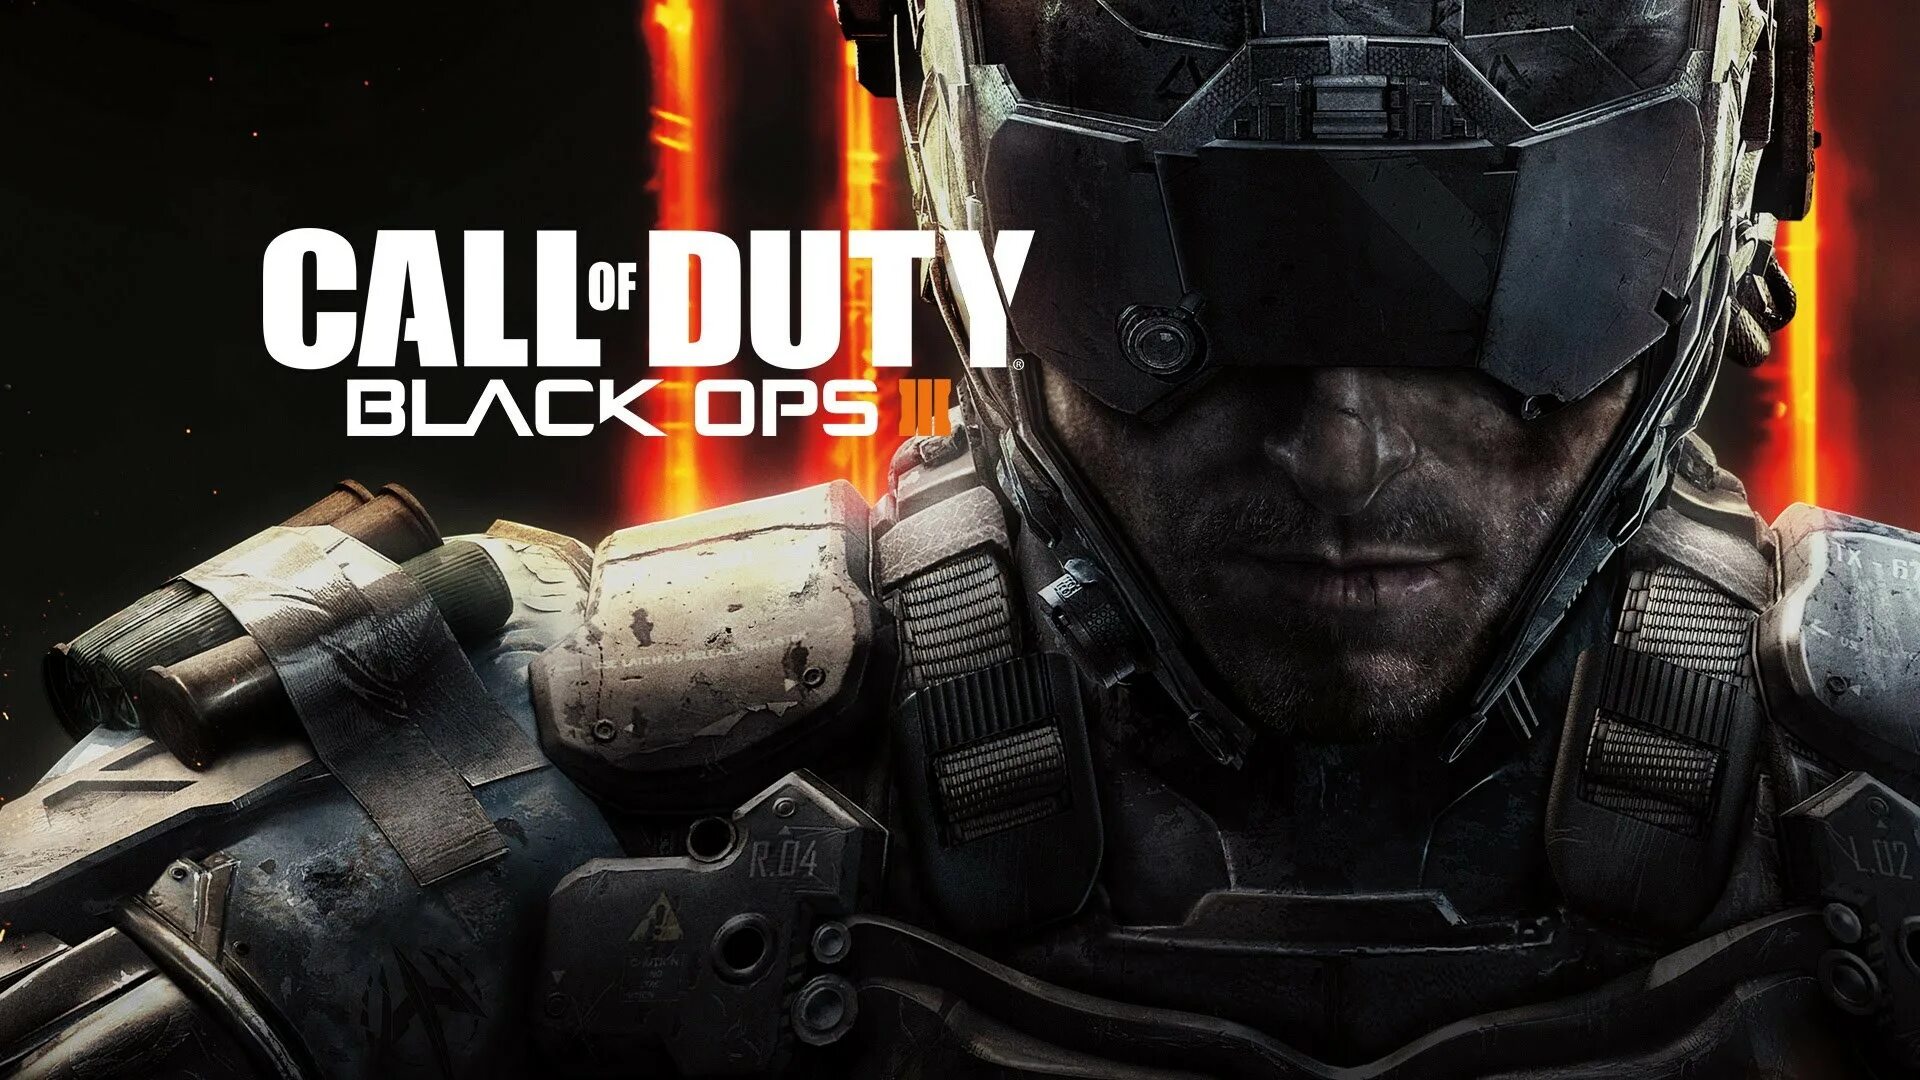 Калл оф дьюти опс 3. Call of Duty Black ops 3. Call of Duty Блэк ОПС 3. Cod Black ops 3 обложка. Колл оф дьюти Блэк упс 3.